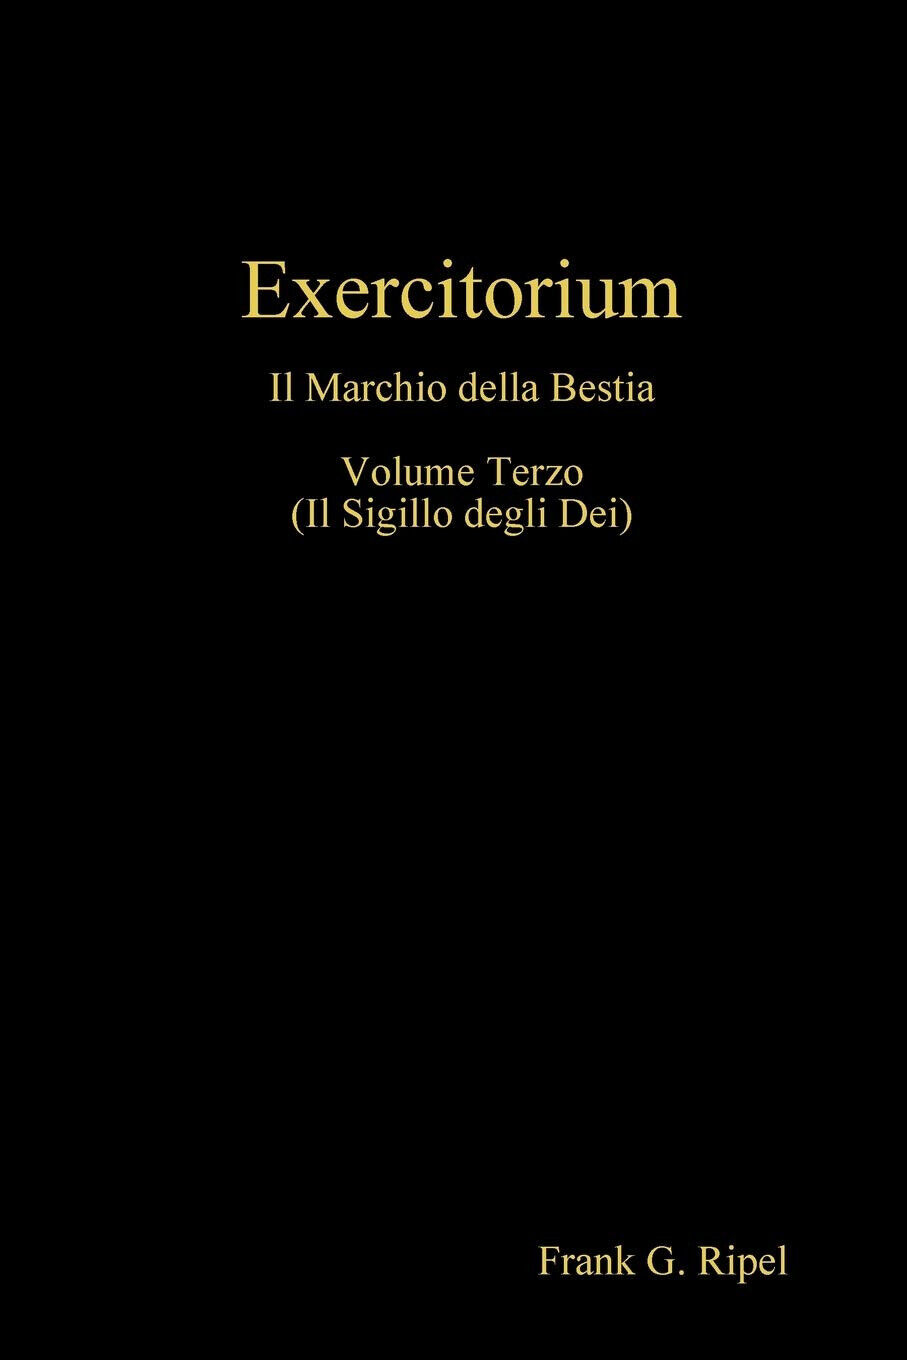 Exercitorium vol3 - Frank G. Ripel - Lulu.com,2019 libro usato